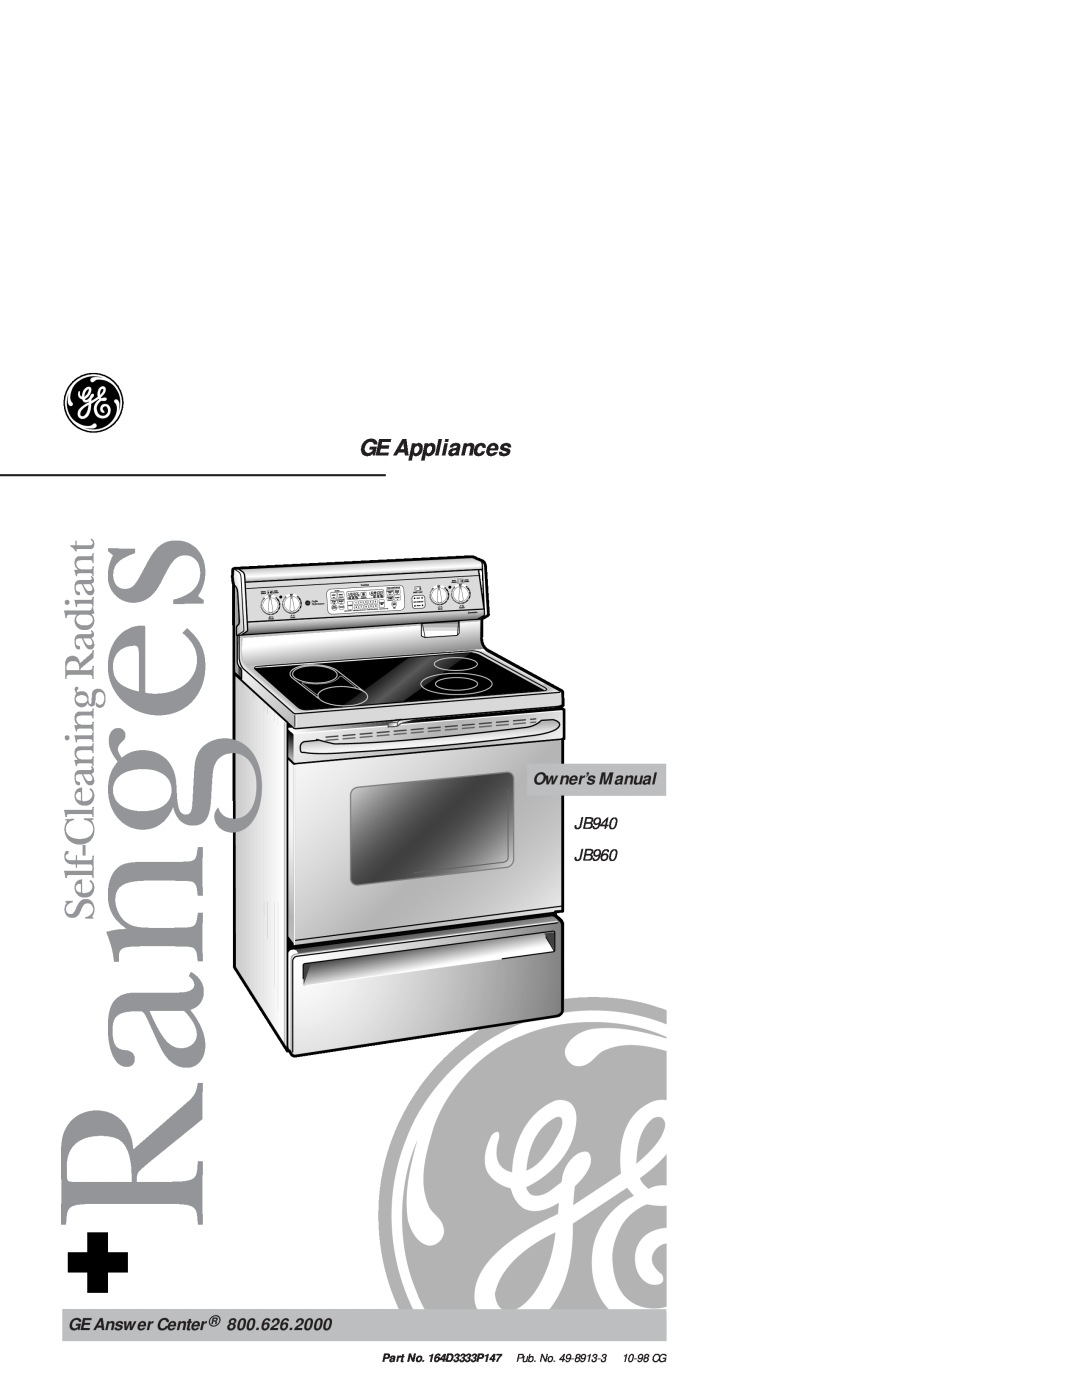 GE owner manual GE Appliances, GE Answer Center, Owner’s Manual, JB940 JB960, RangesSelf-Cleaning Radiant 